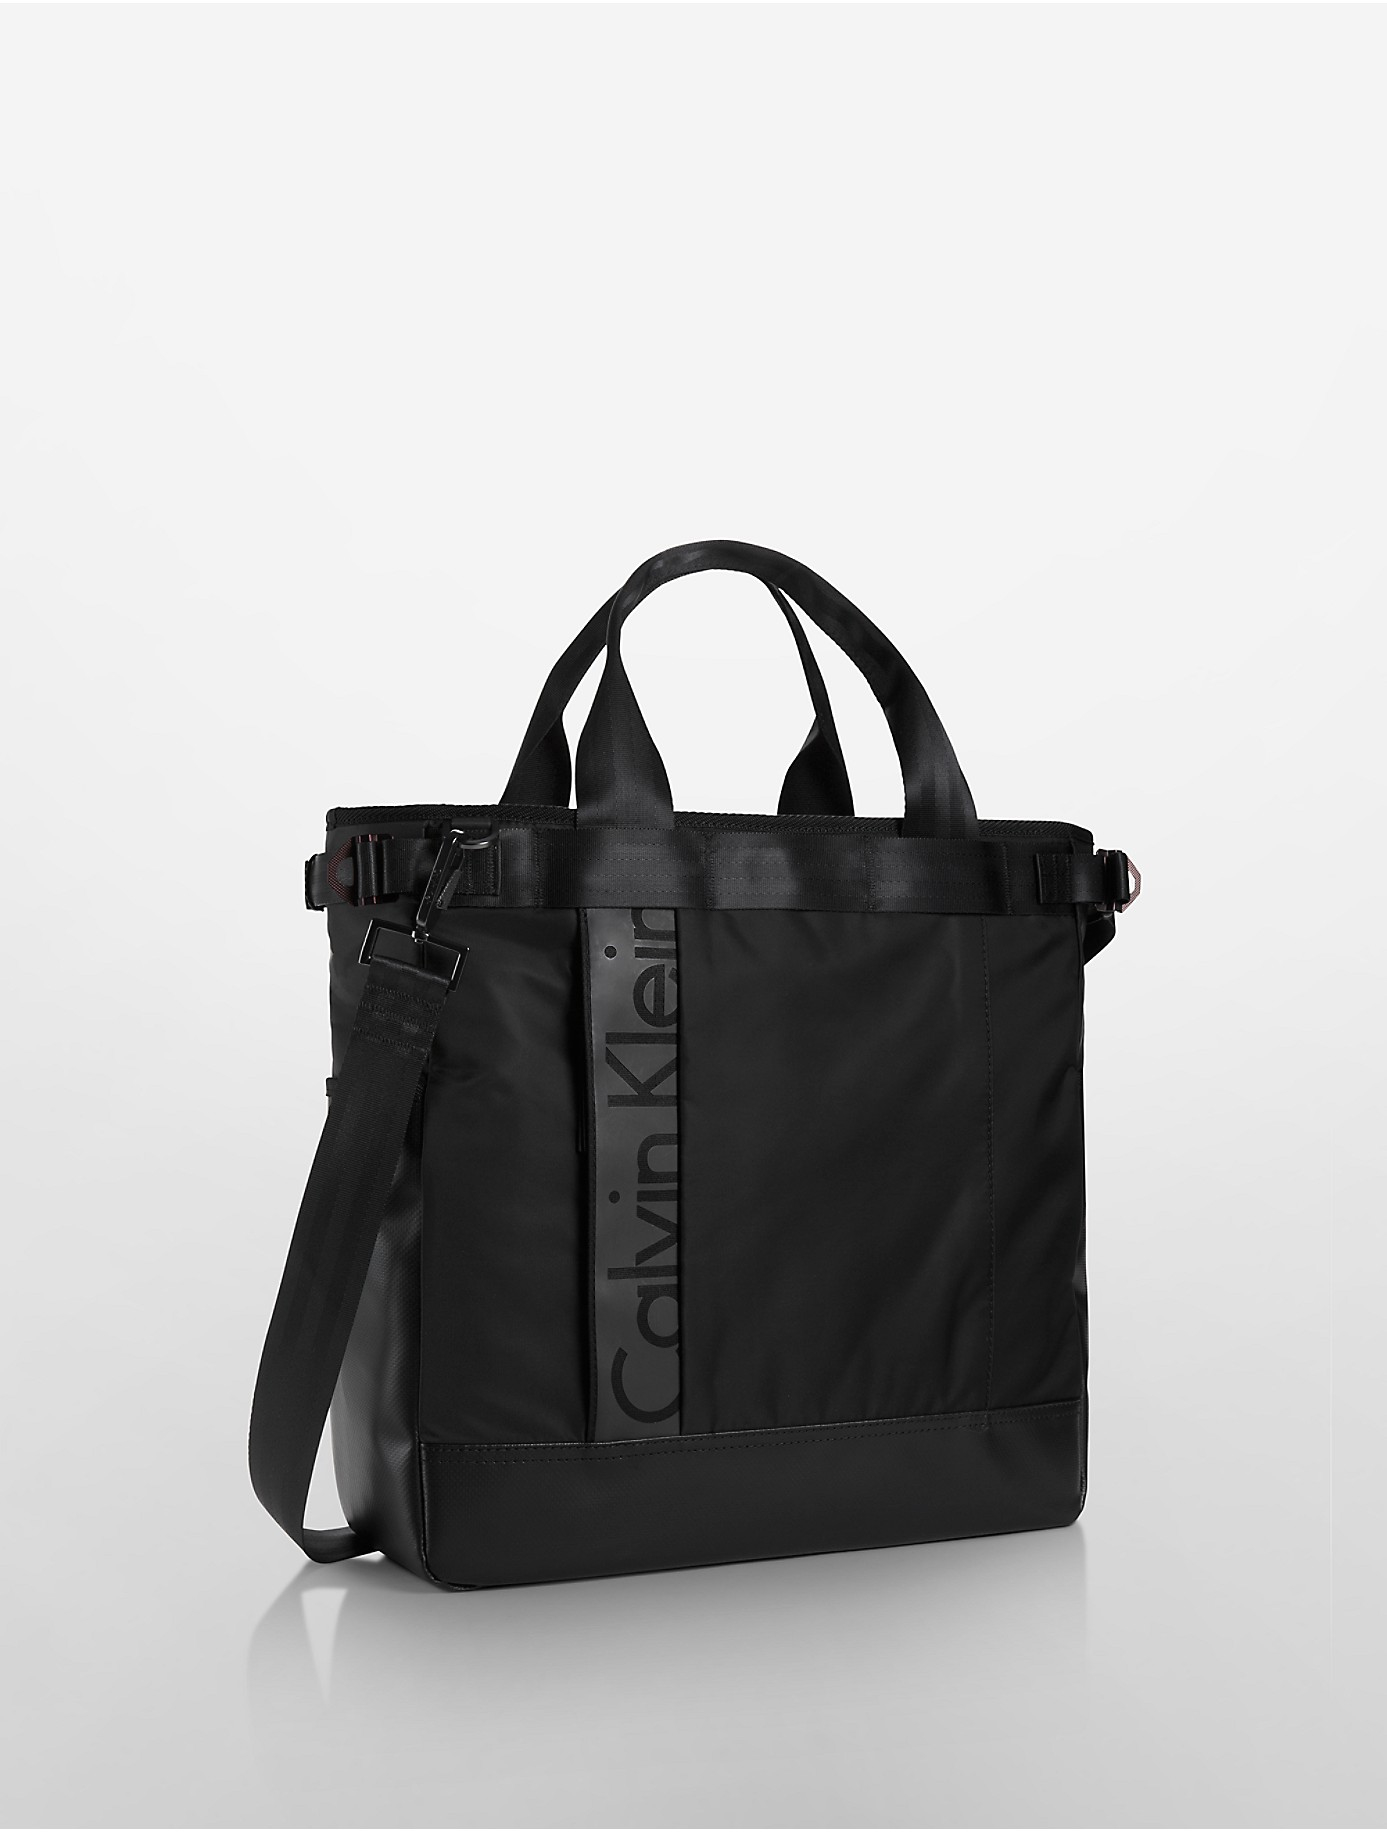 Lyst - Calvin Klein Jeans Pilot Tote Bag in Black for Men